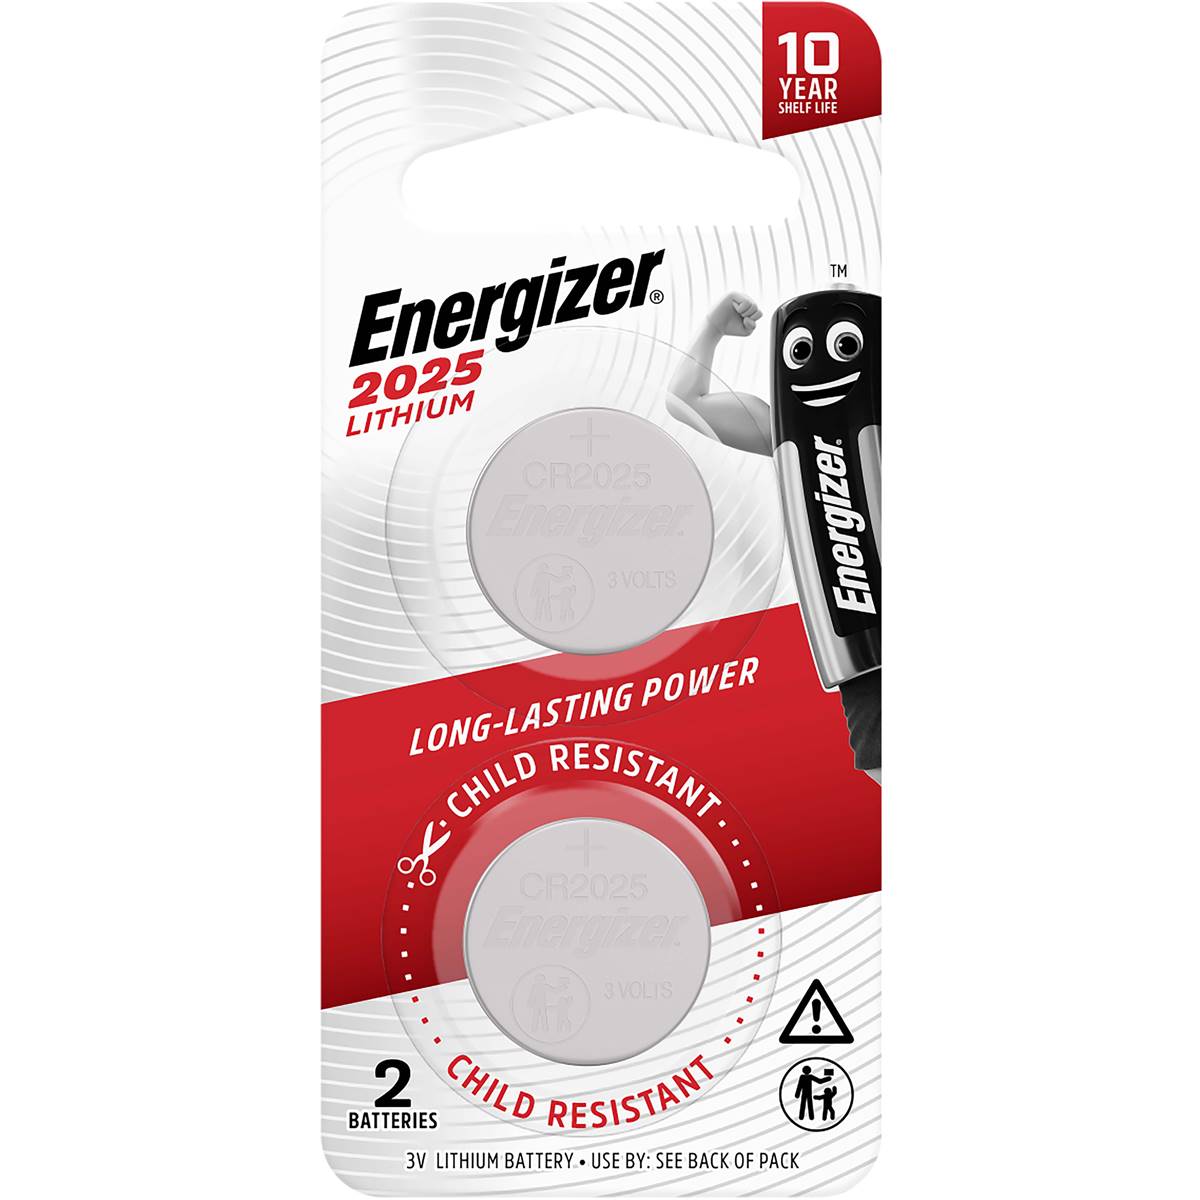 Energizer 2025 Lithium Batteries 2 Pack